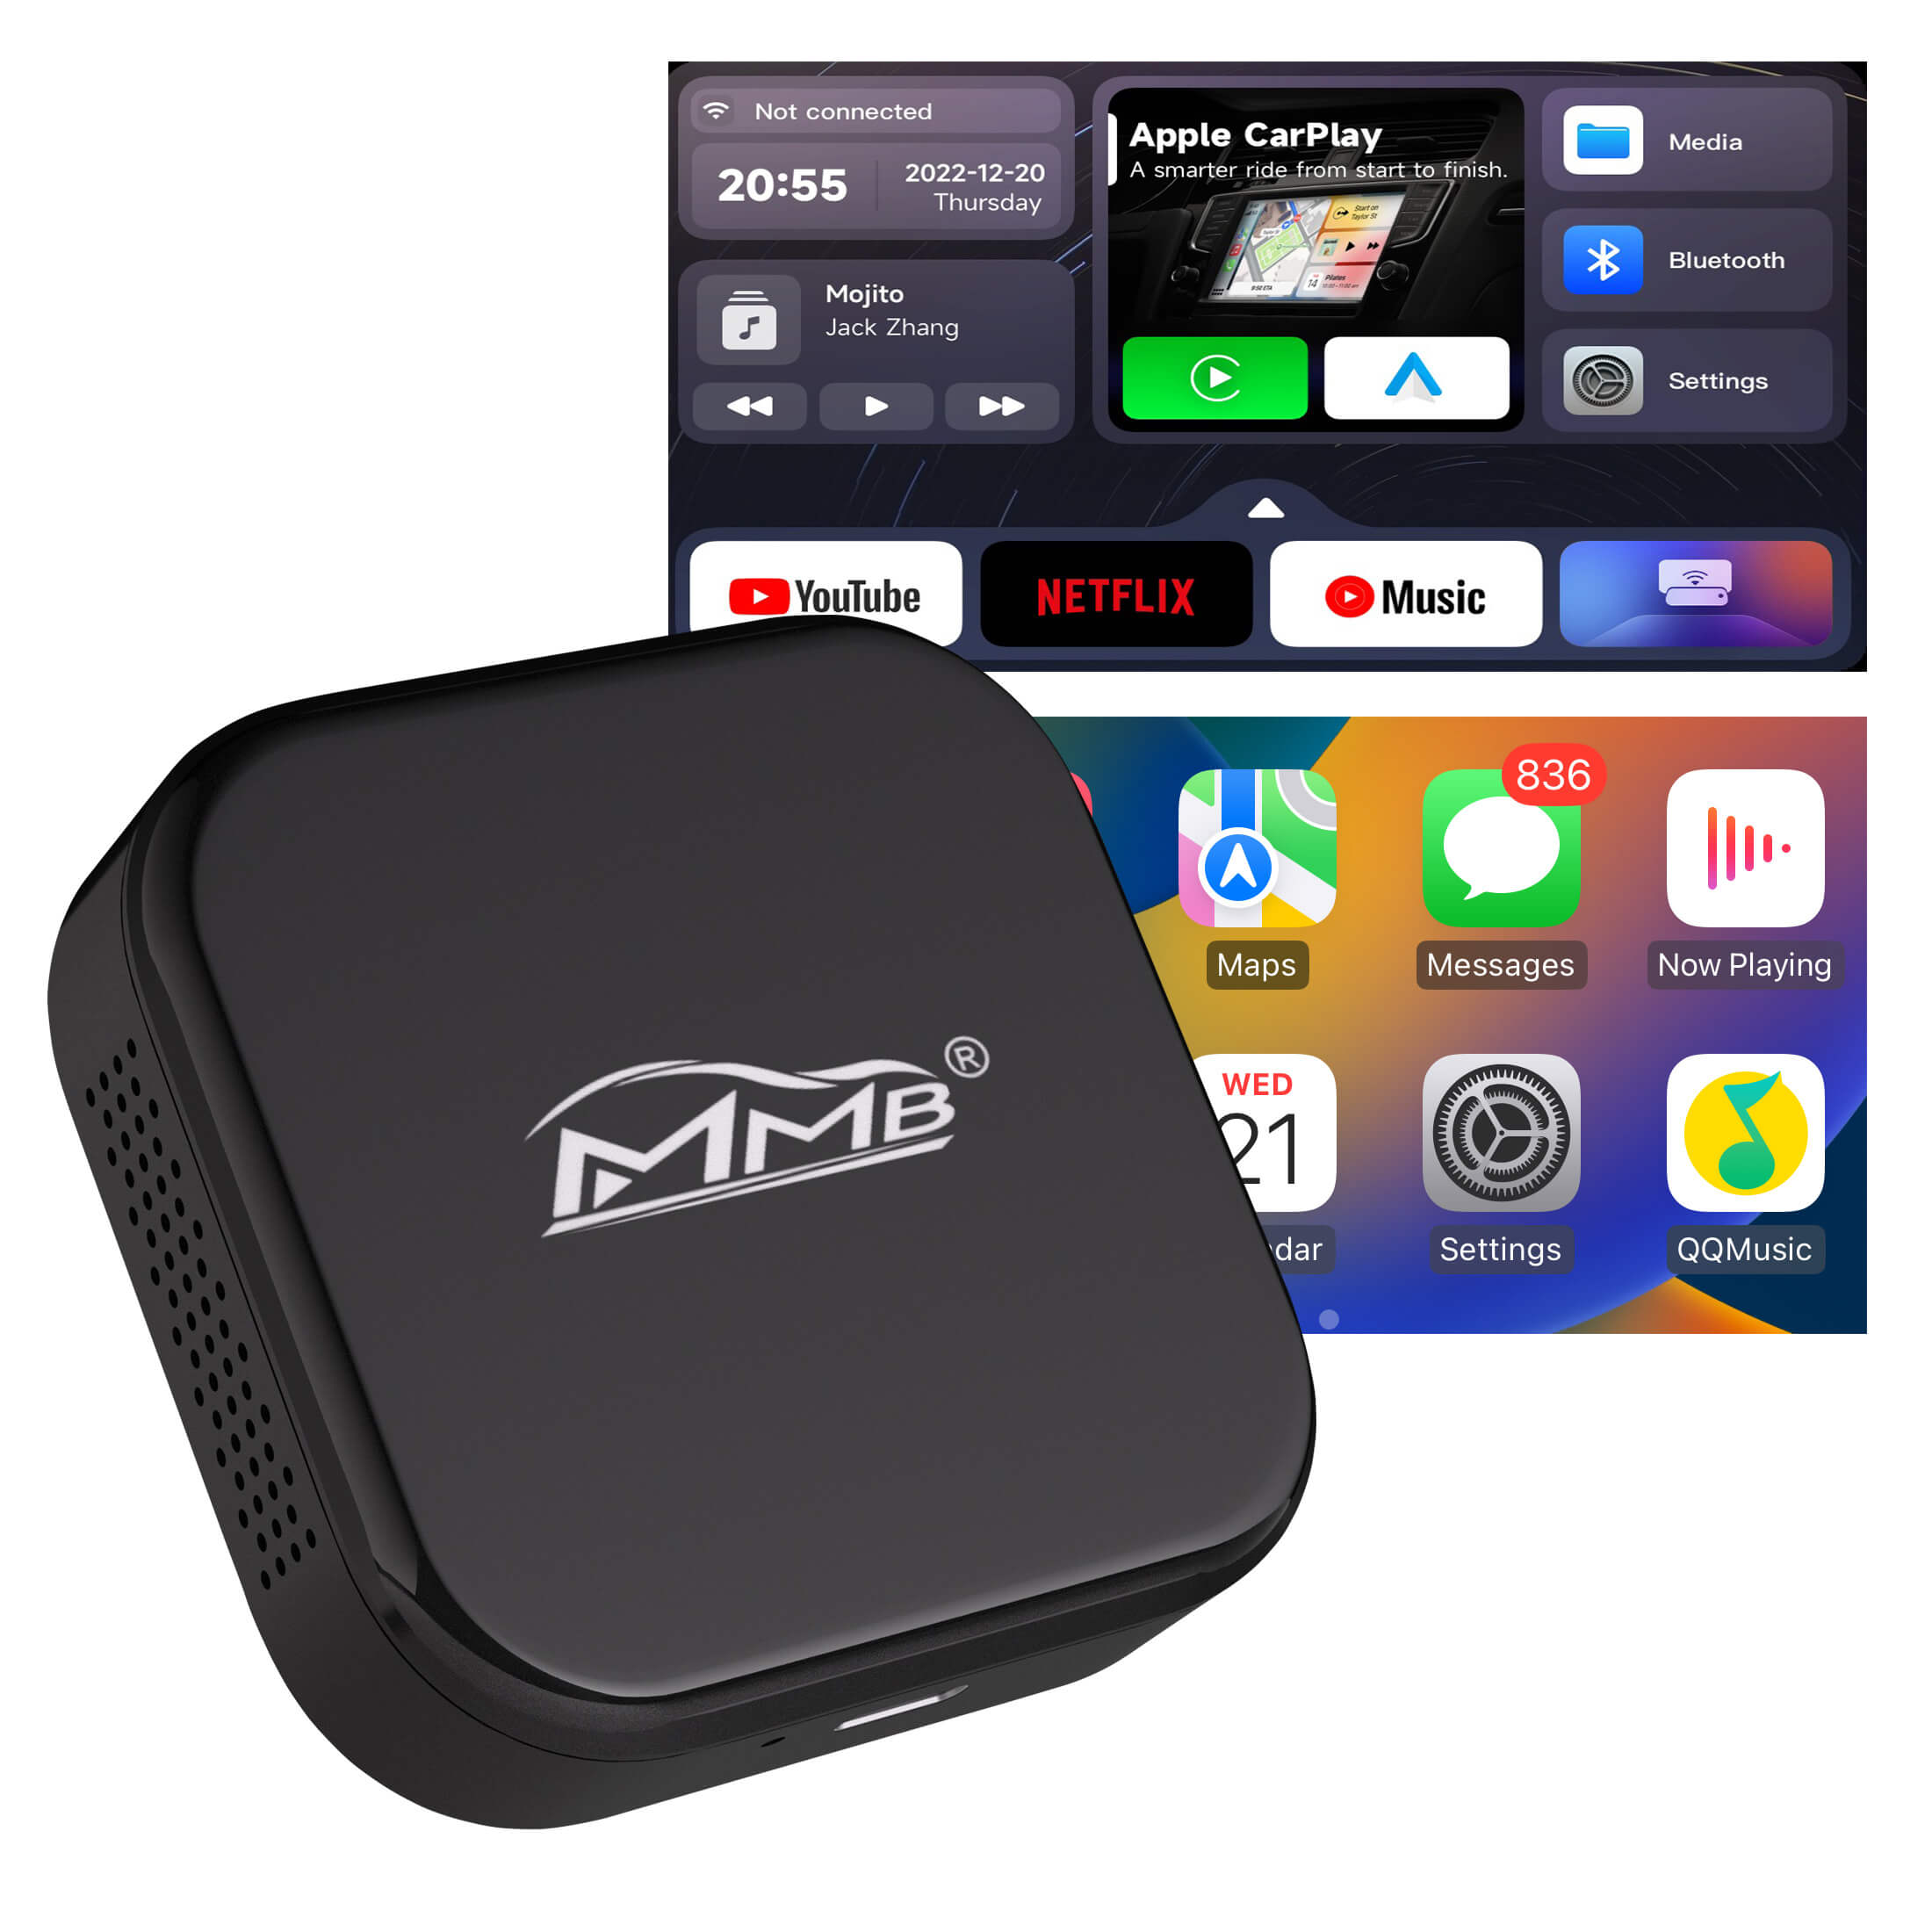 Carlinkit Wireless Multimedia Video Player Carplay AI BOX Android Auto  Adapter